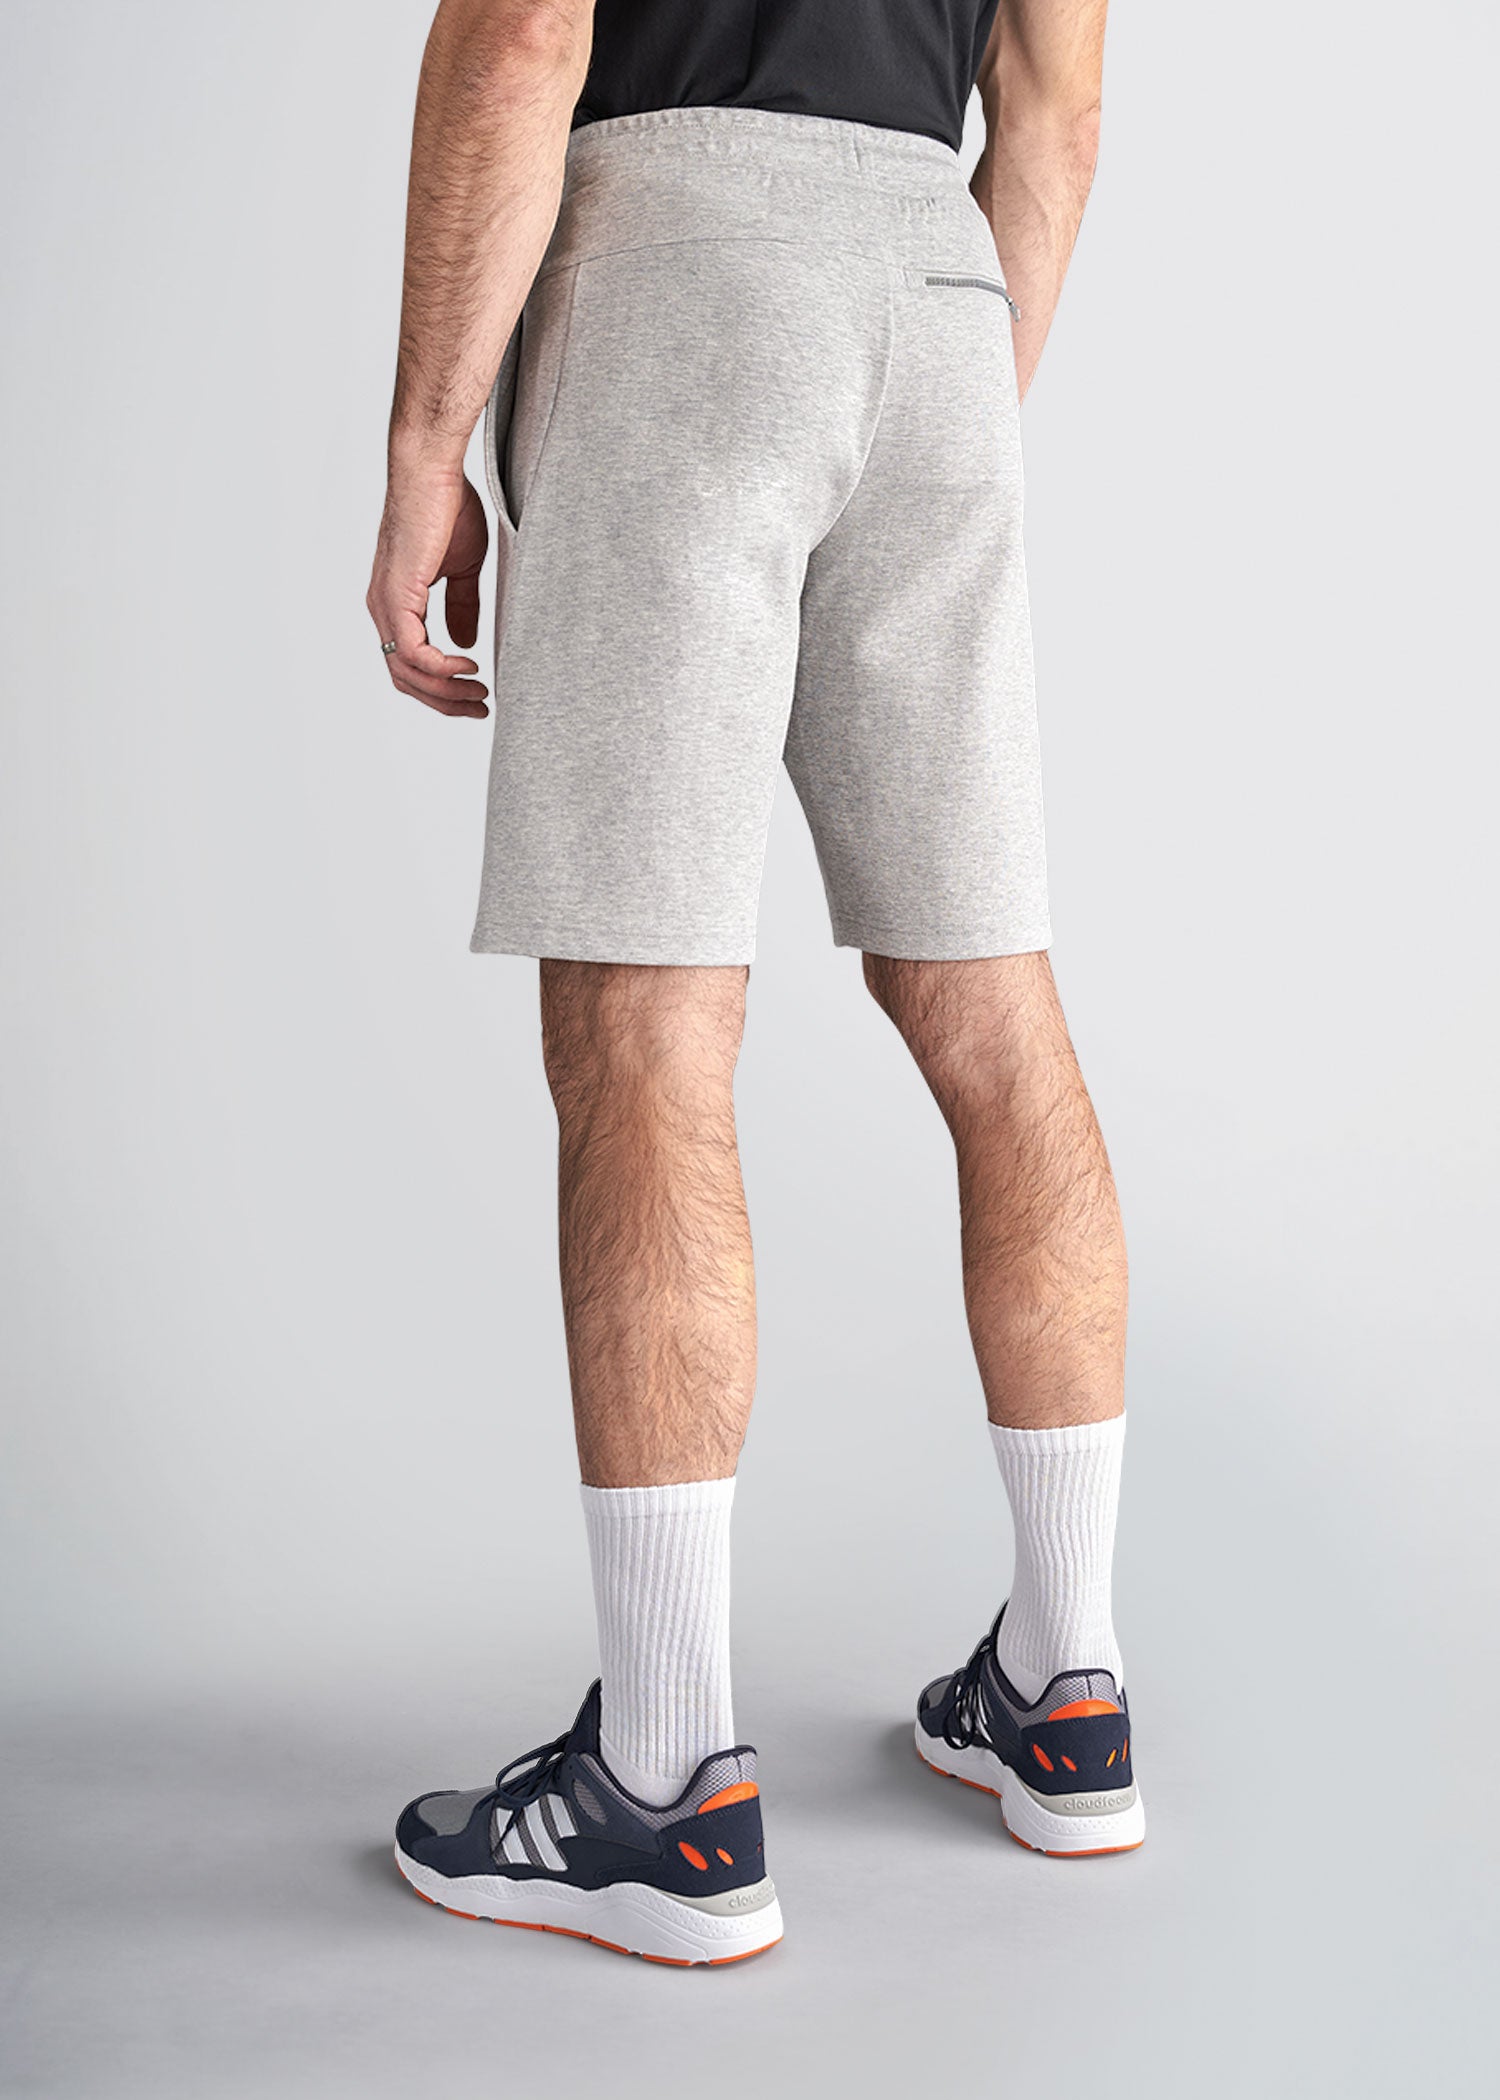 american-tall-mens-knit-athletic-short-grey-back